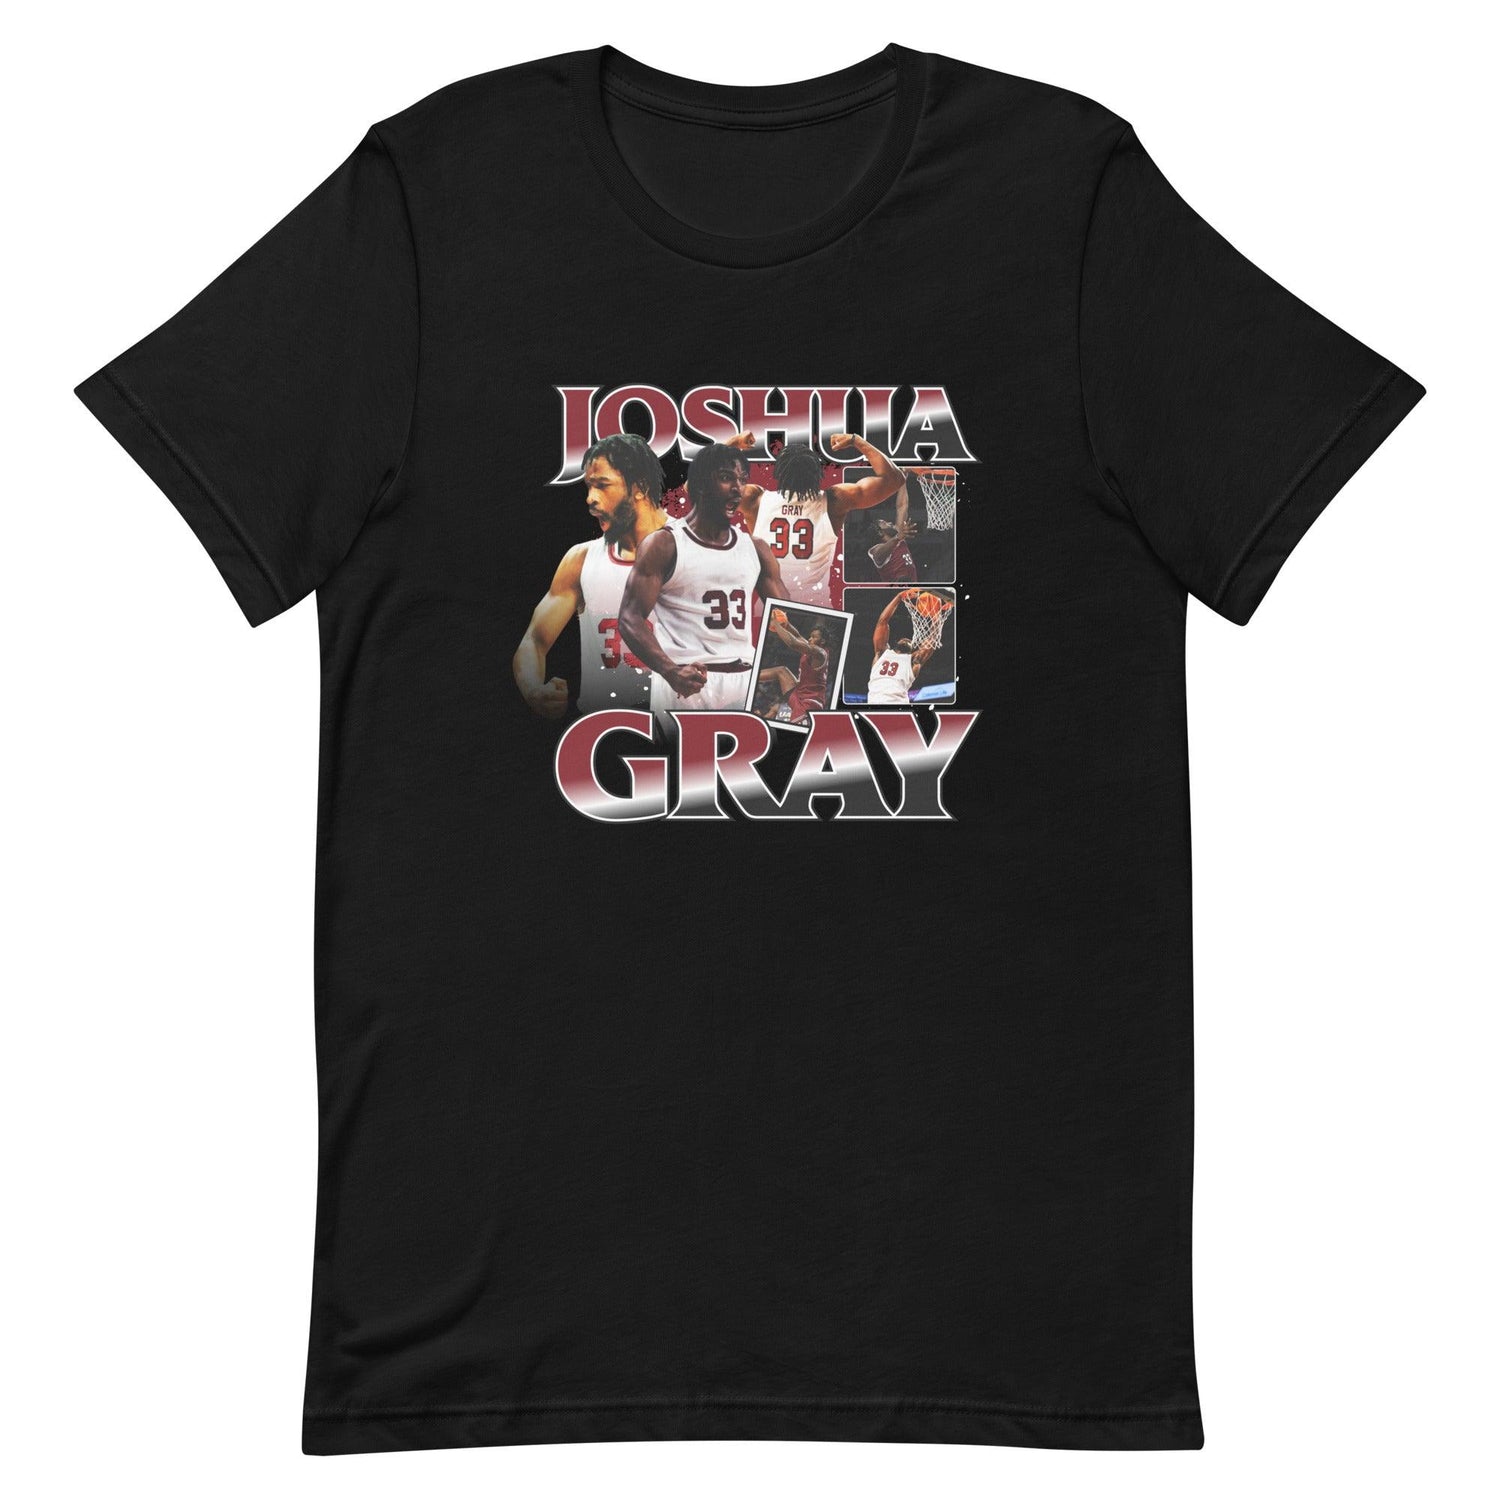 Joshua Gray "Vintage" t-shirt - Fan Arch